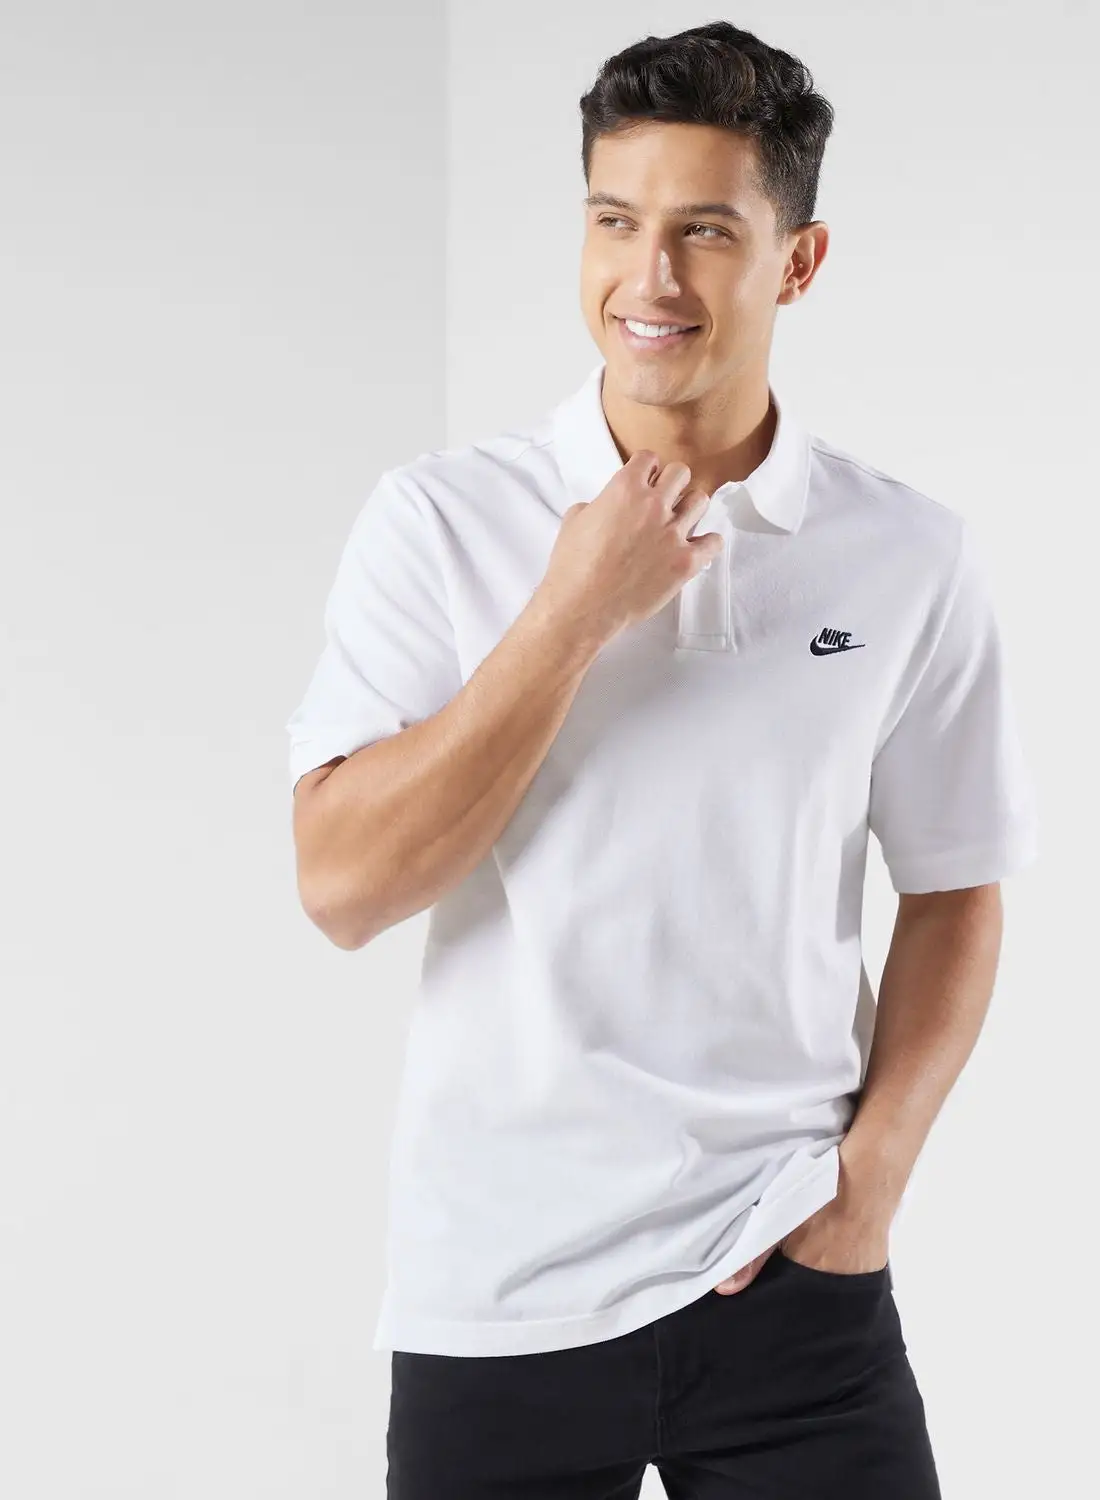 Nike Club Essential Polo Pique Polo Shirt